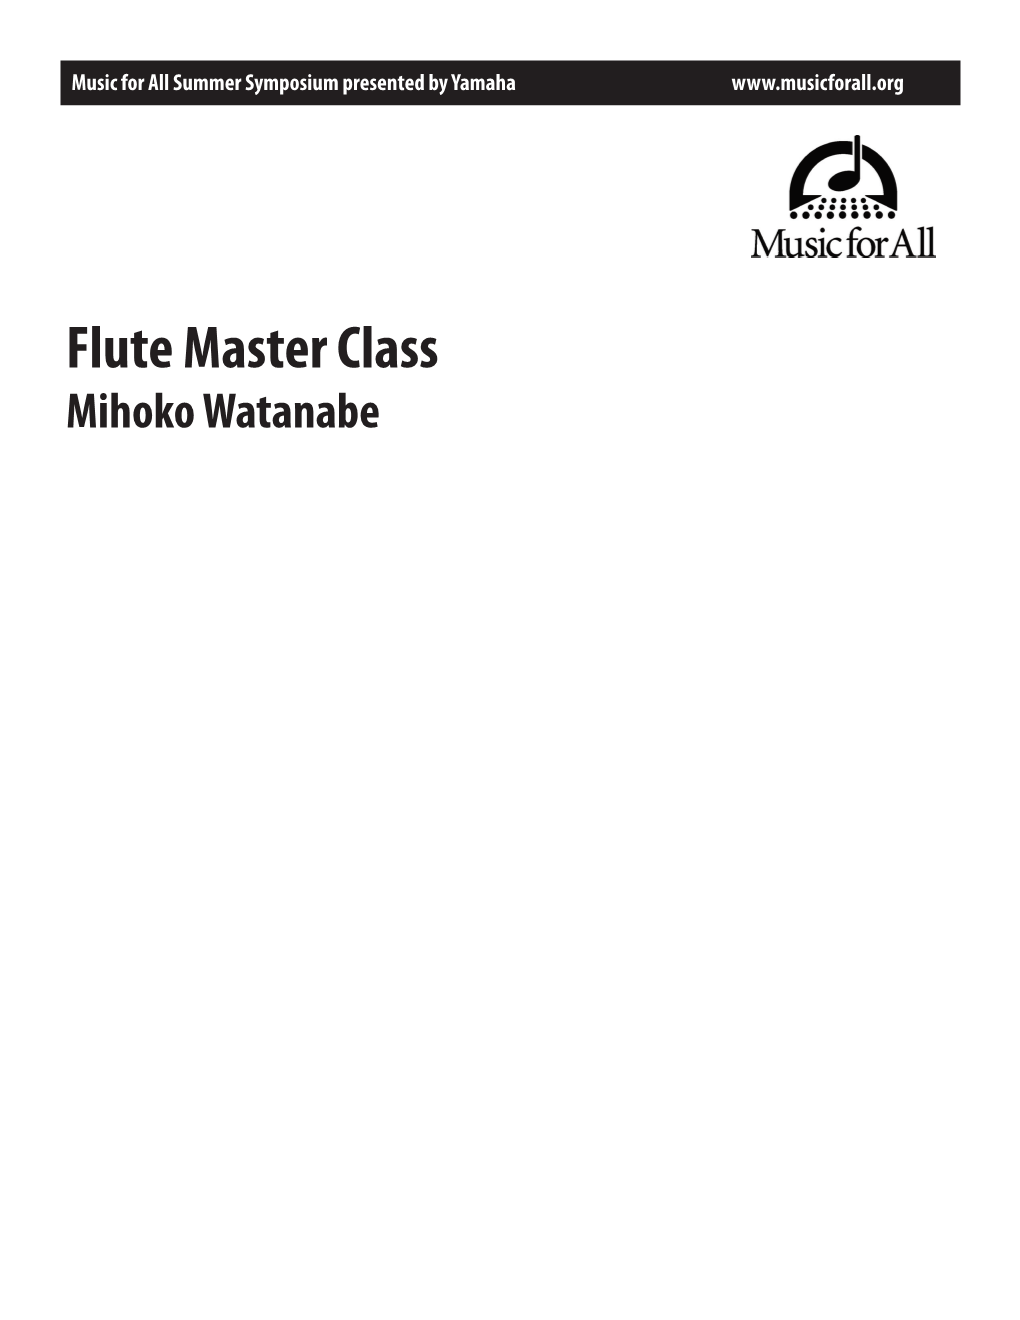 Flute Master Class Mihoko Watanabe